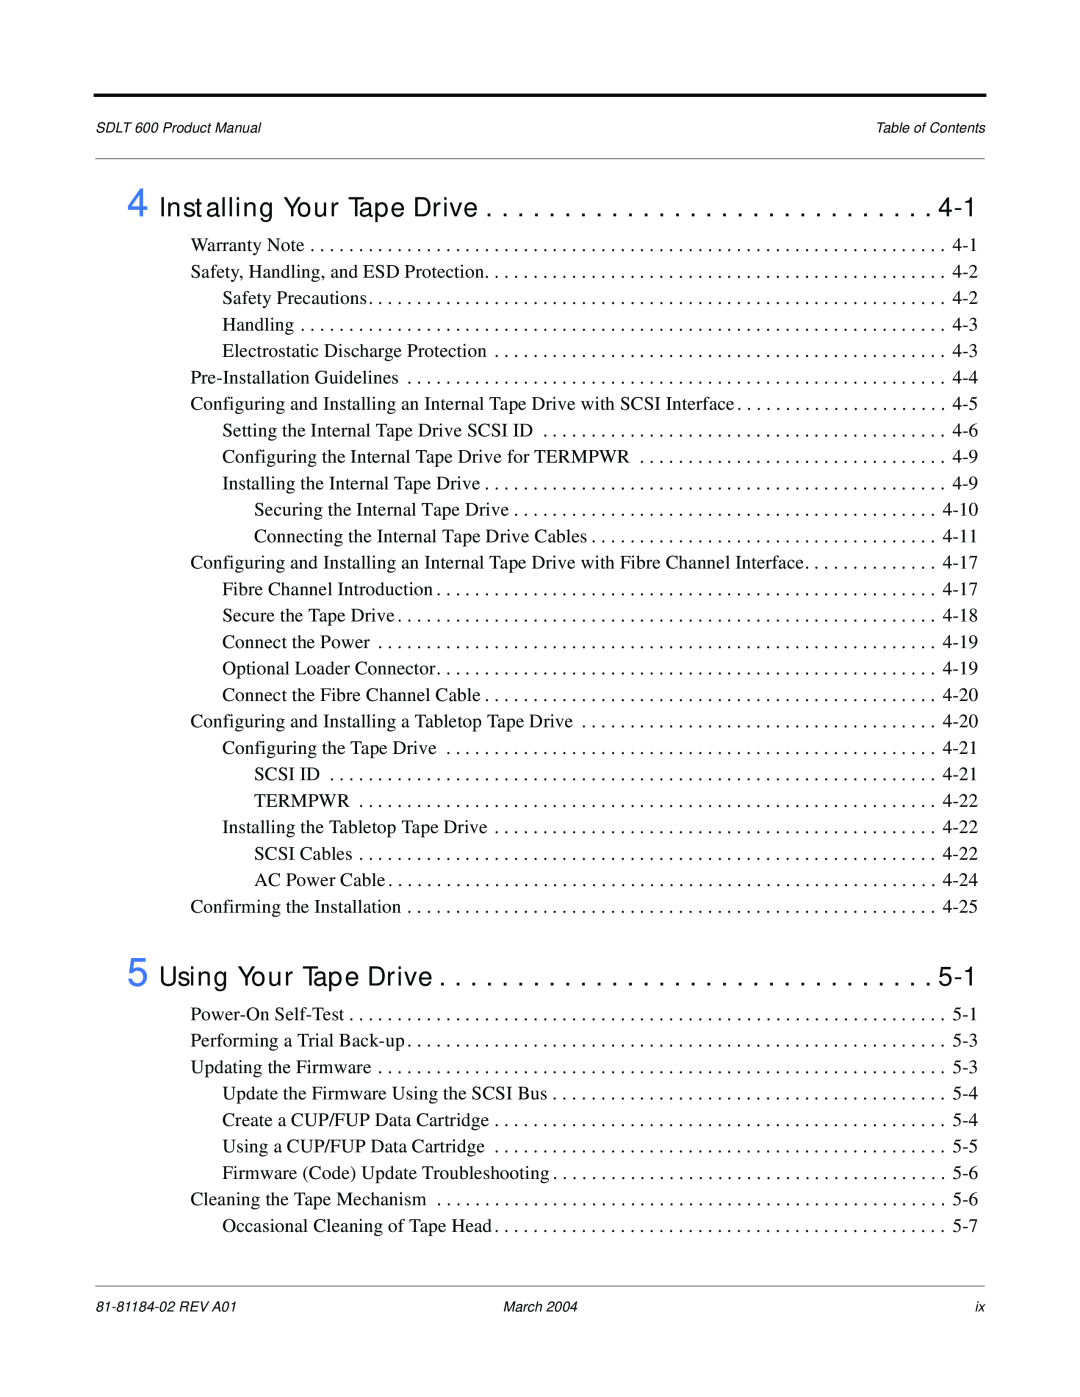 Tandberg Data 600 manual Installing Your Tape Drive, Using Your Tape Drive, Confirming the Installation 